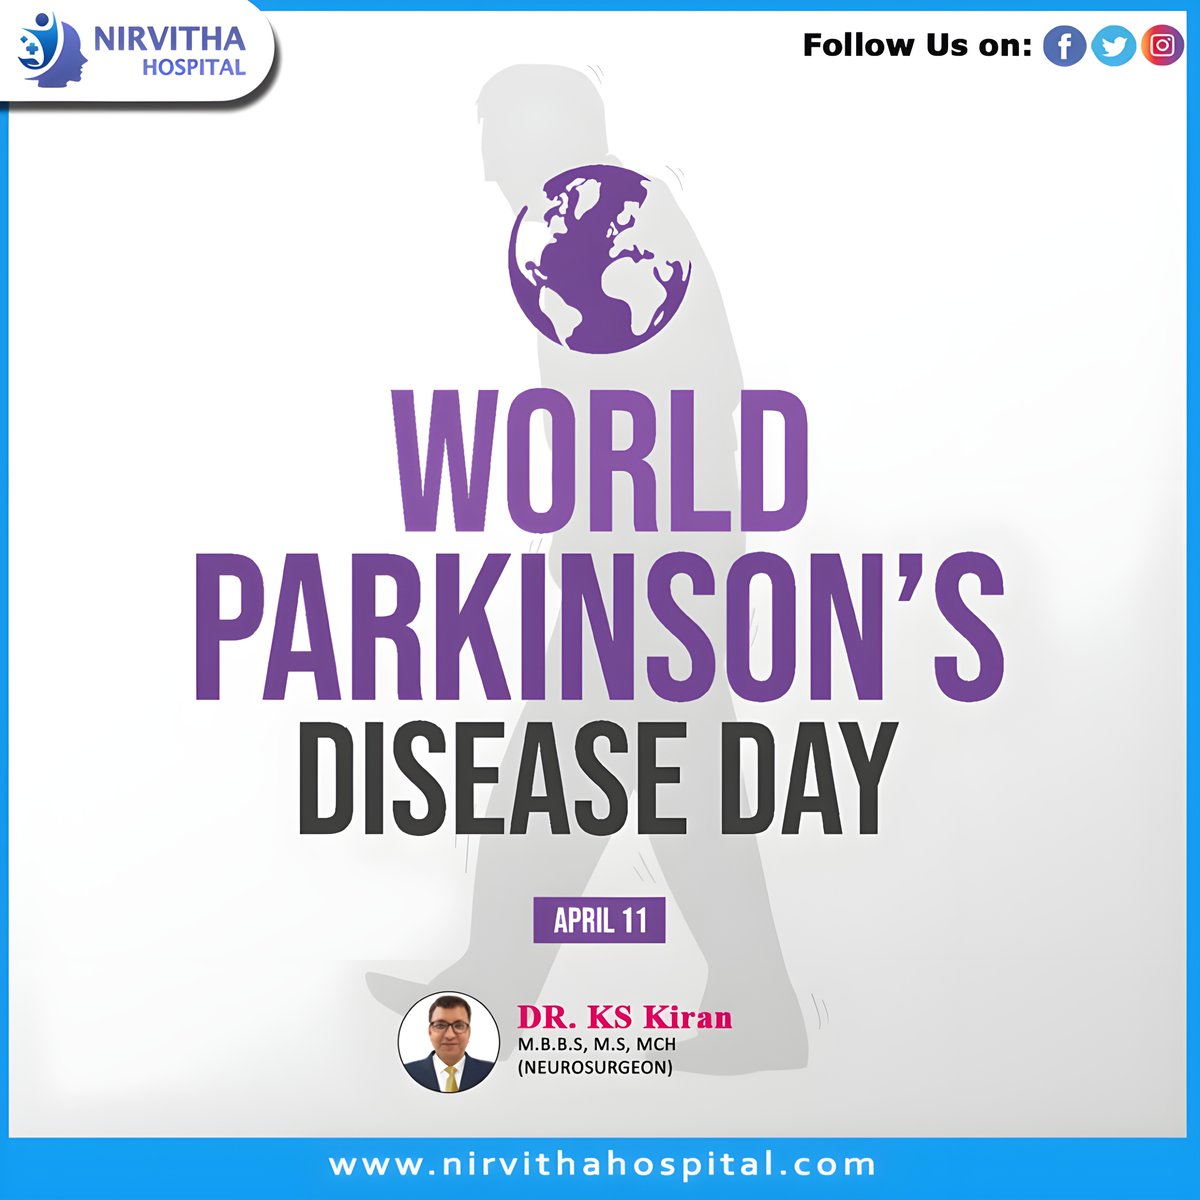 World Parkinson's Disease Day.

#ParkinsonsAwareness #UniteForParkinsons #ParkinsonsFight #Move4PD #ParkinsonsCommunity #EndParkinsons #PDWarrior #ParkinsonsSupport #HopeForParkinsons #ParkinsonsResearch #LivingWithParkinsons 

For more visit:
nirvithahospital.com